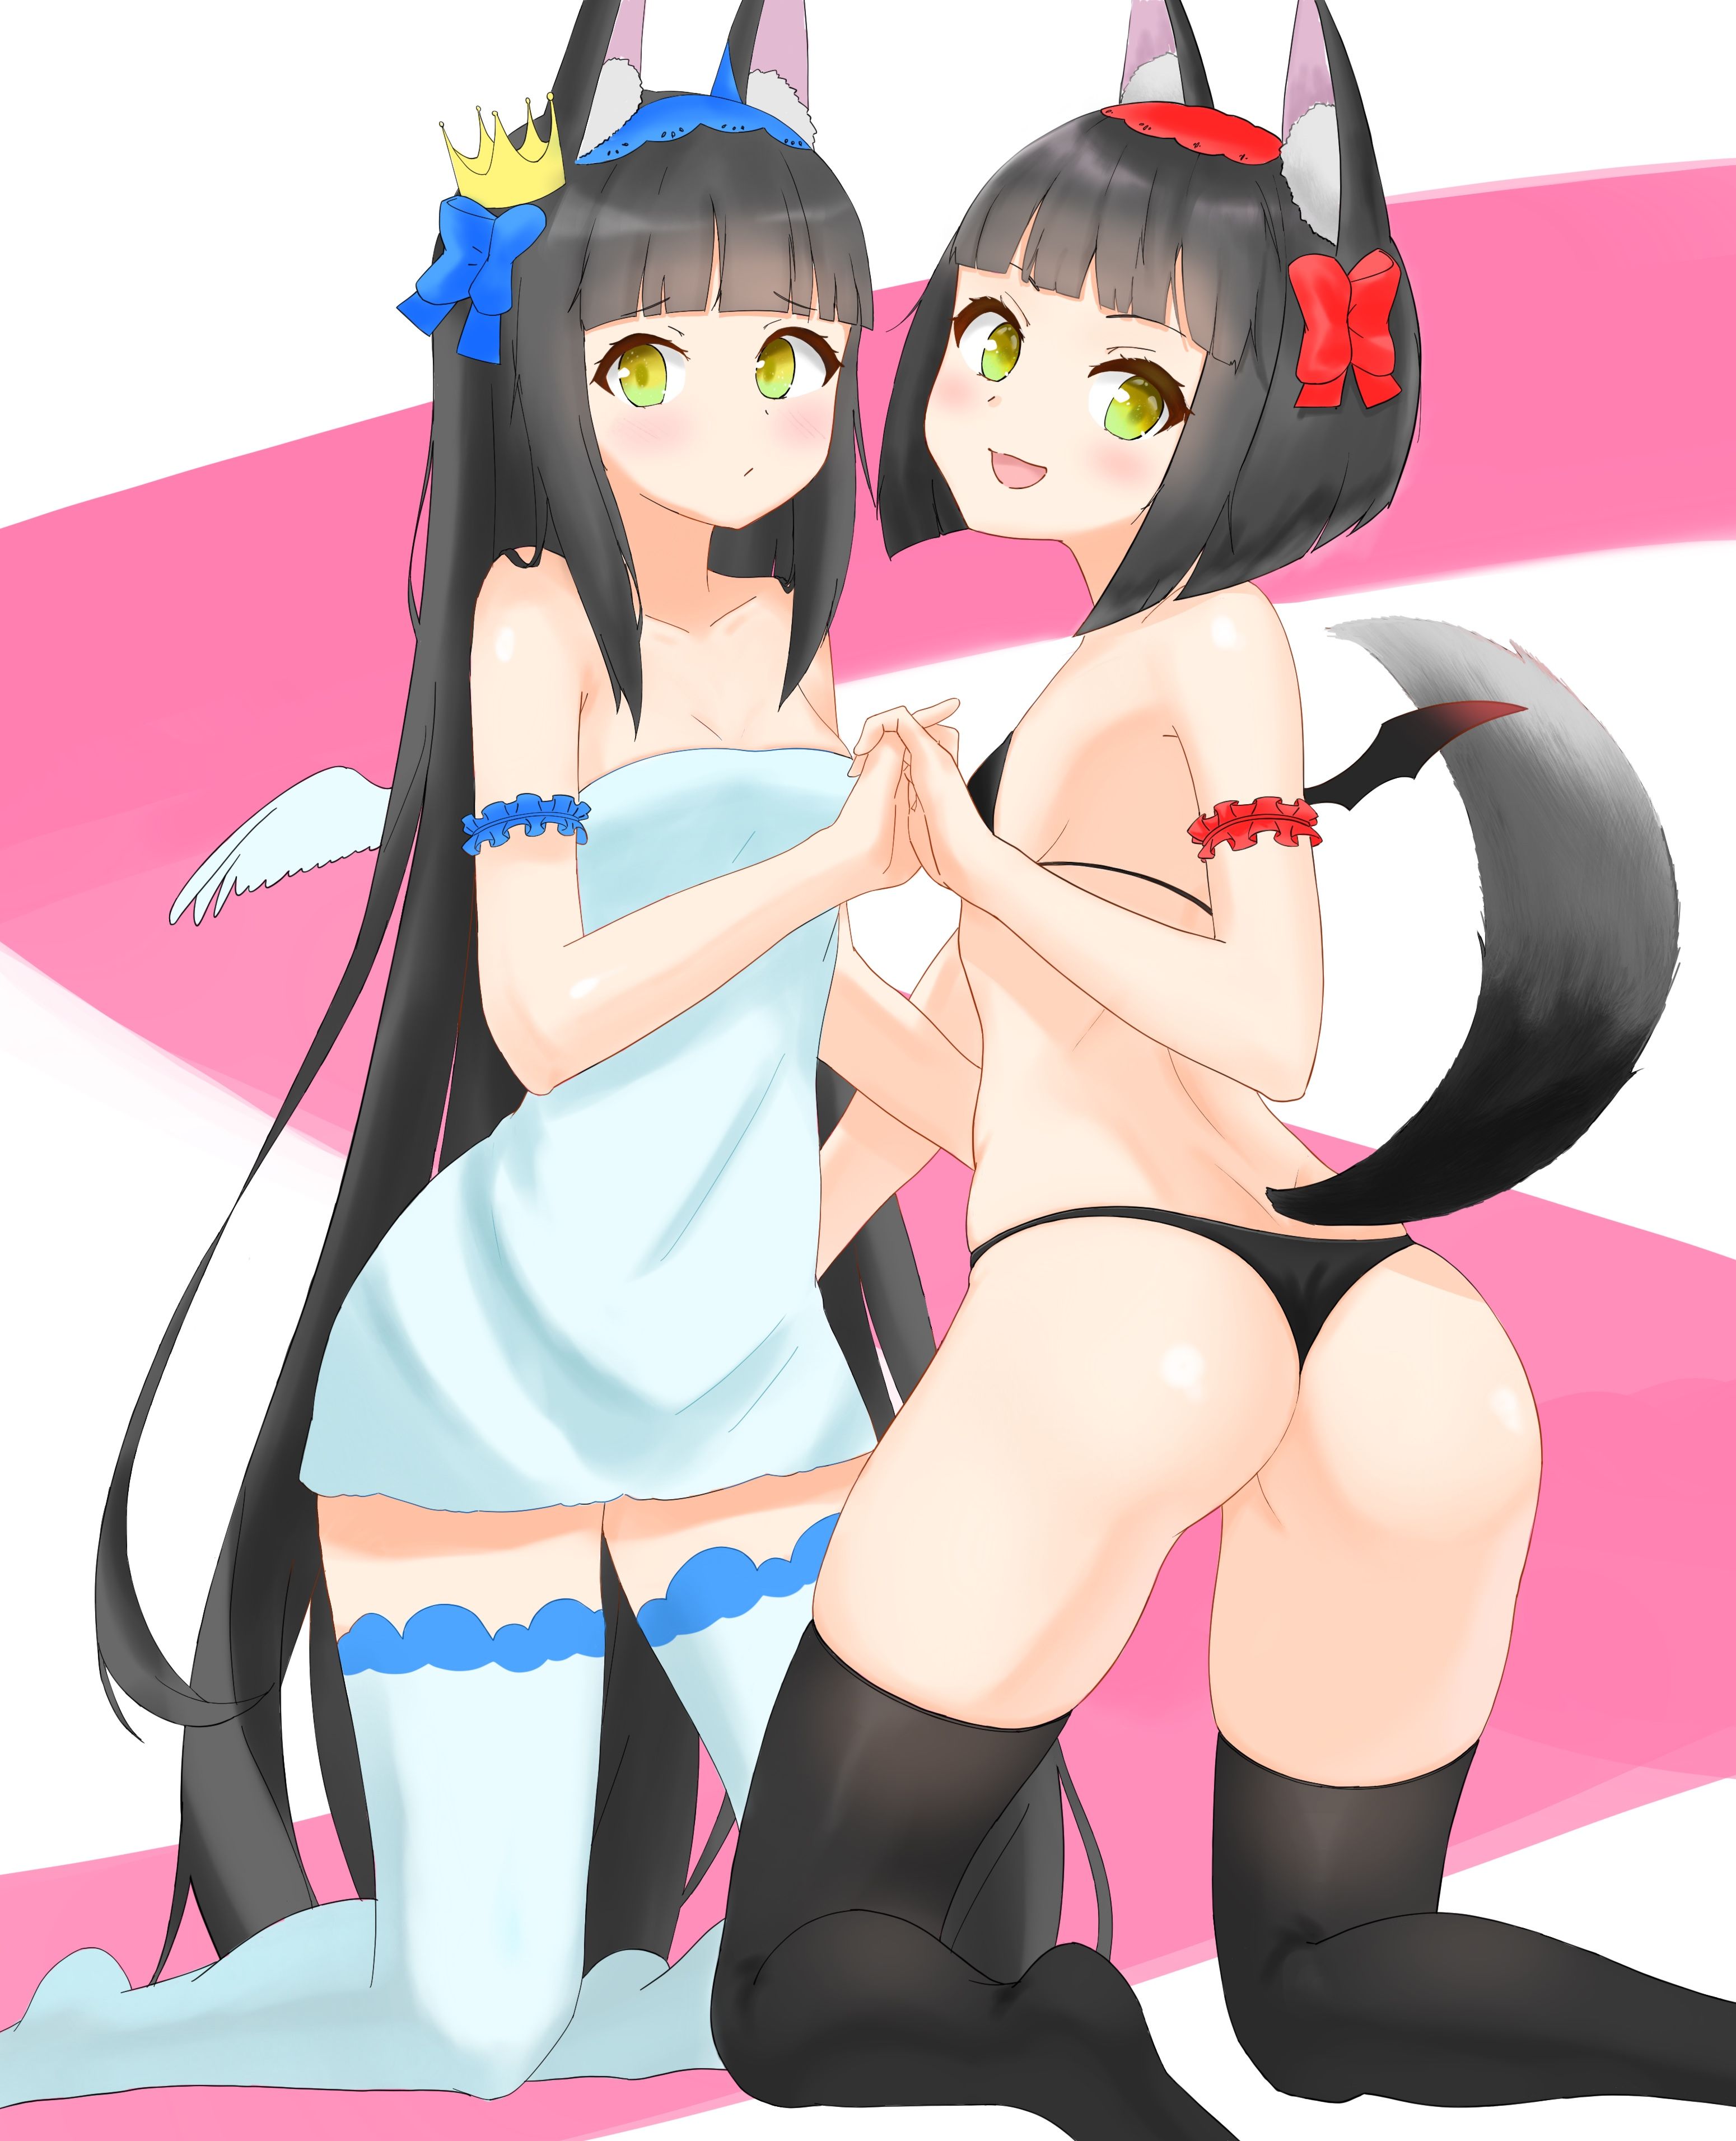 【Mutsu-chan (Azulen)】Secondary erotic image of Azur Lane's black-haired short heavy cherry blossom loli priestess sister ship Mutsu-chan 19